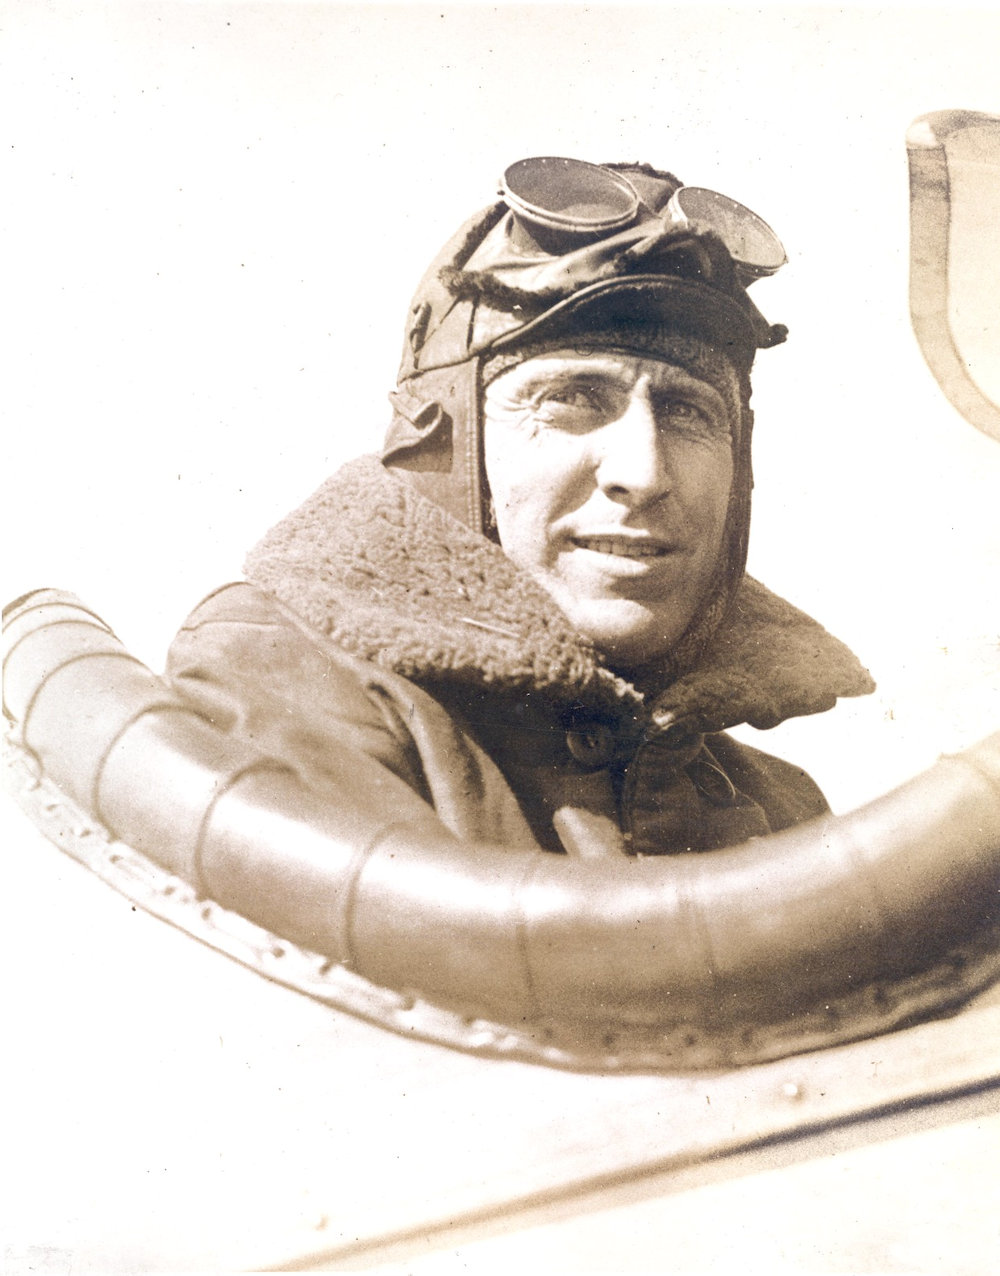 Photograph of Airmail pilot William Carroll